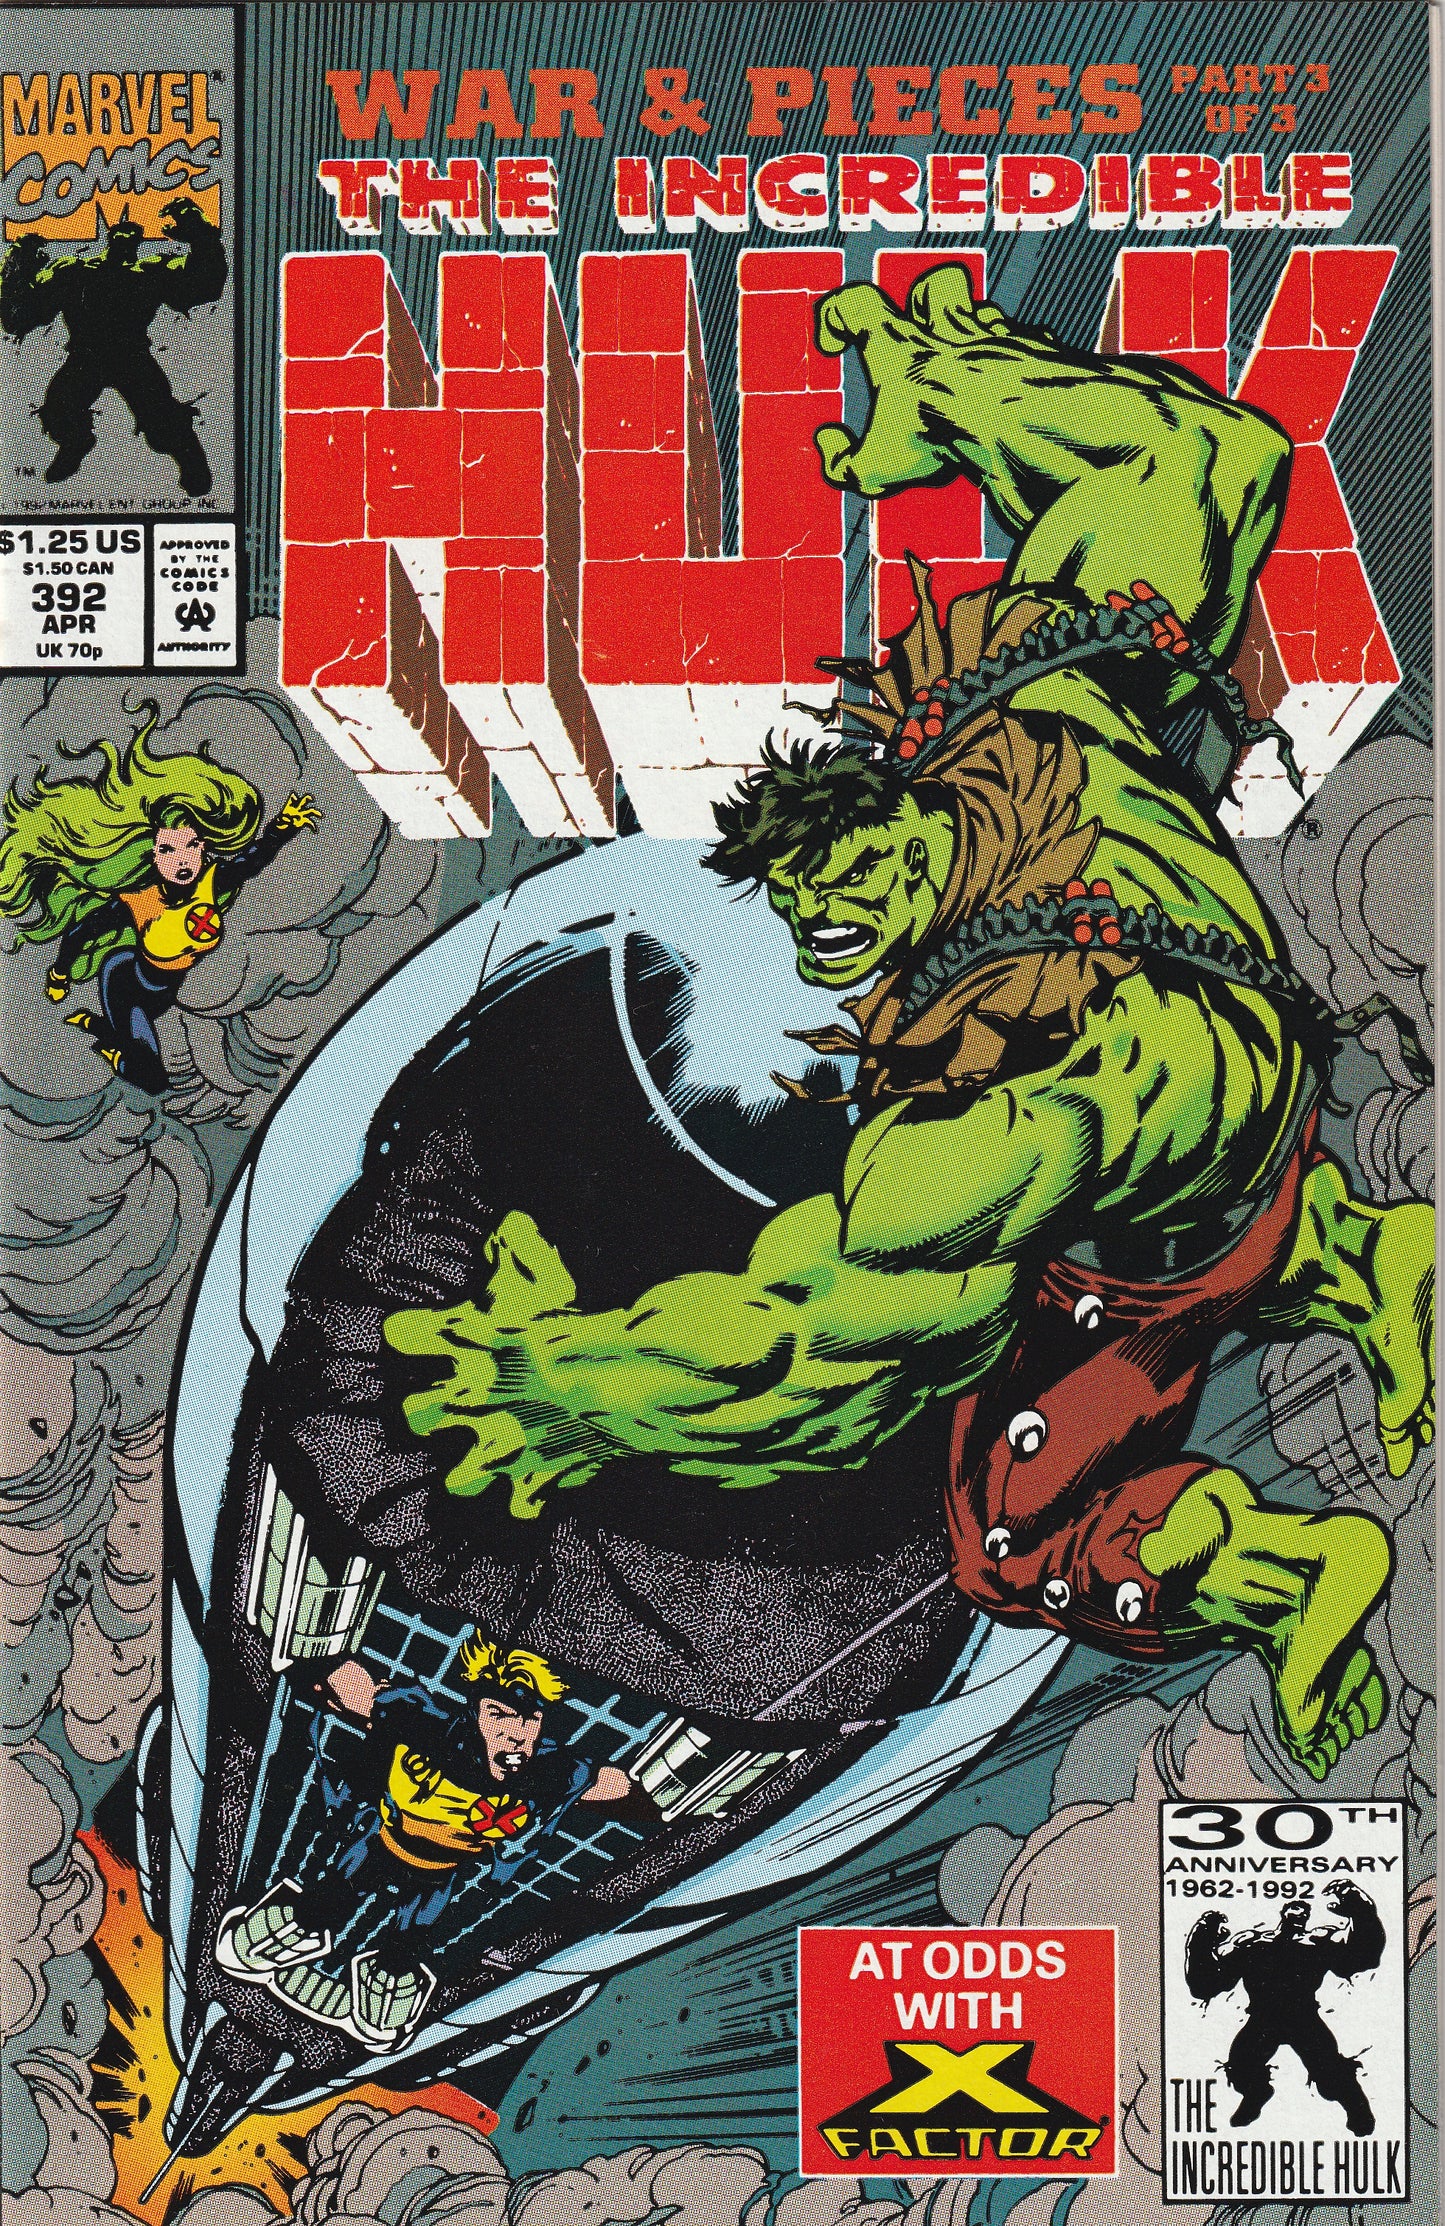 Incredible Hulk #392 (1992) - X-Factor appearance